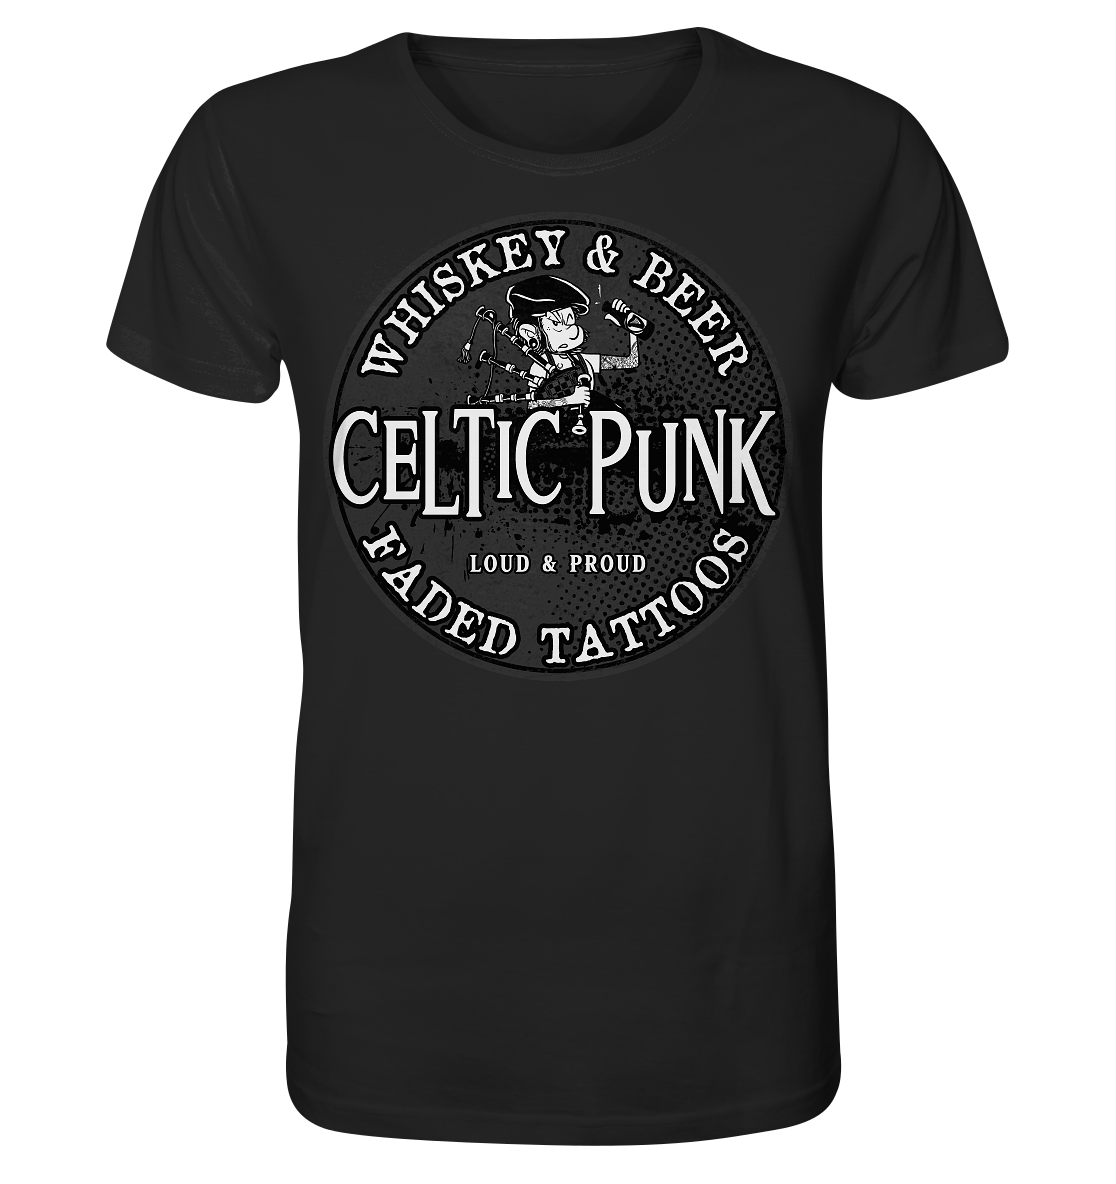 Celtic Punk "Whiskey, Beer & Faded Tattoos" - Organic Shirt